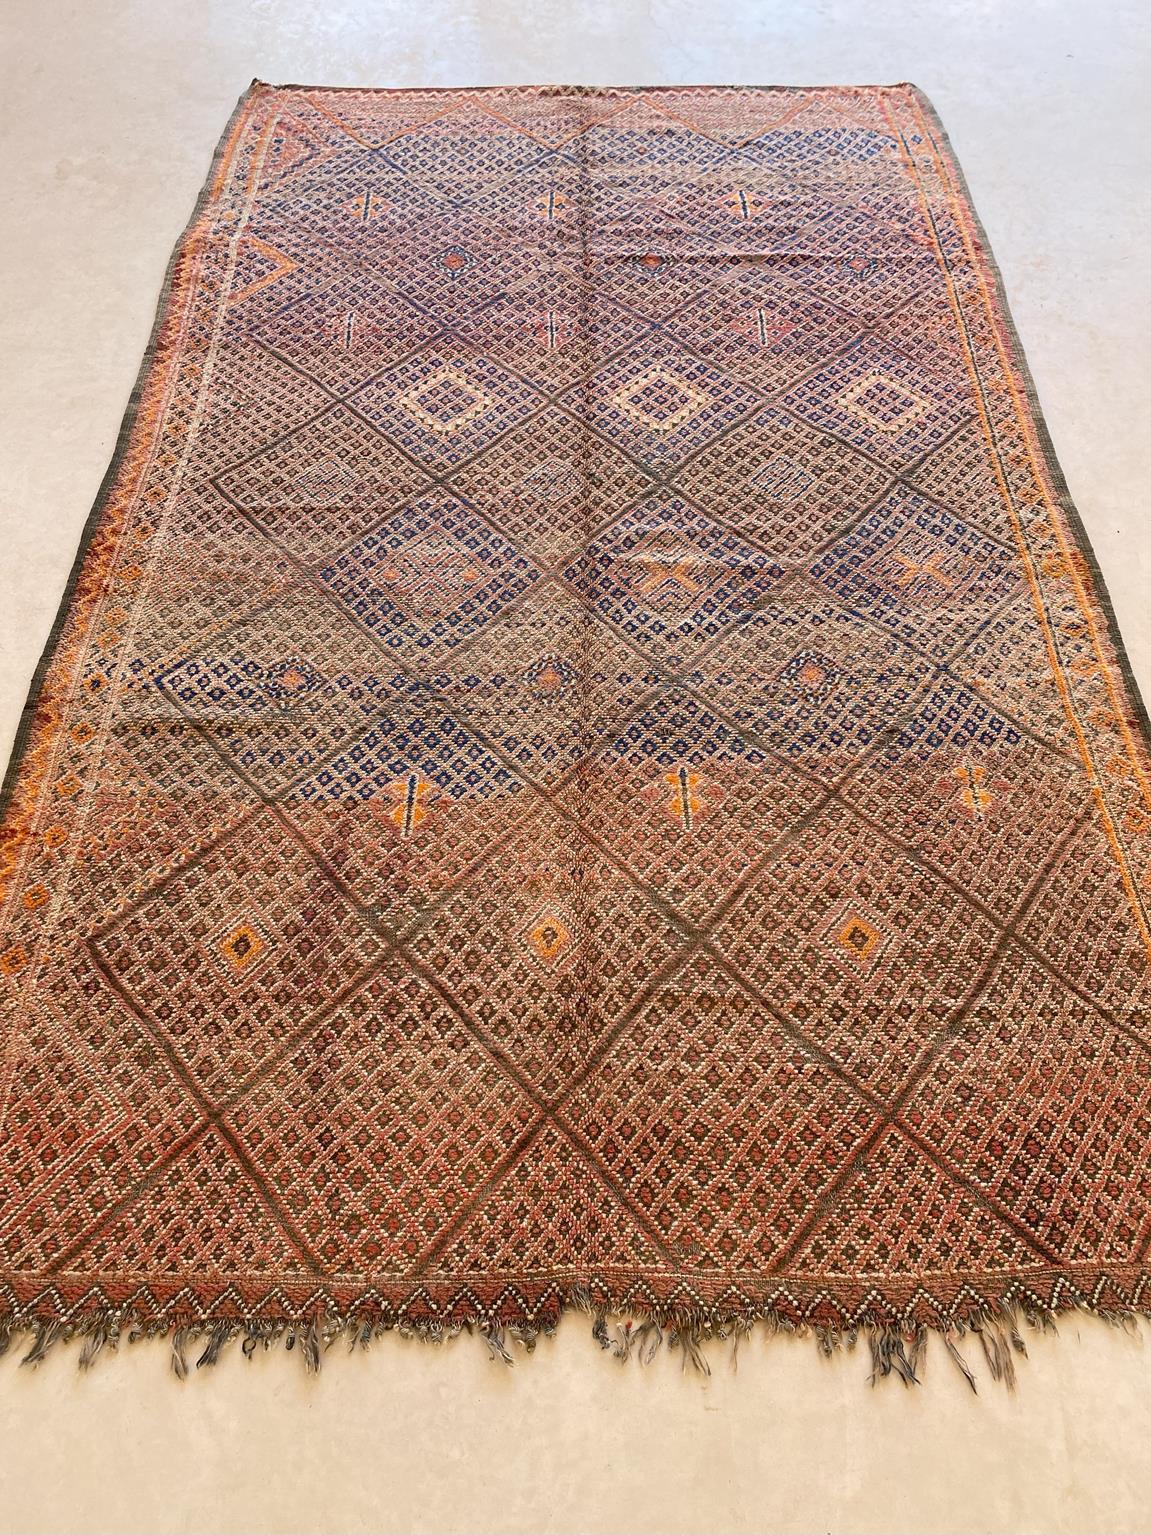 Hand-Woven Vintage Beni Mguild rug - Orange/terracotta/blue - 6.1x9.8feet / 186x298cm For Sale